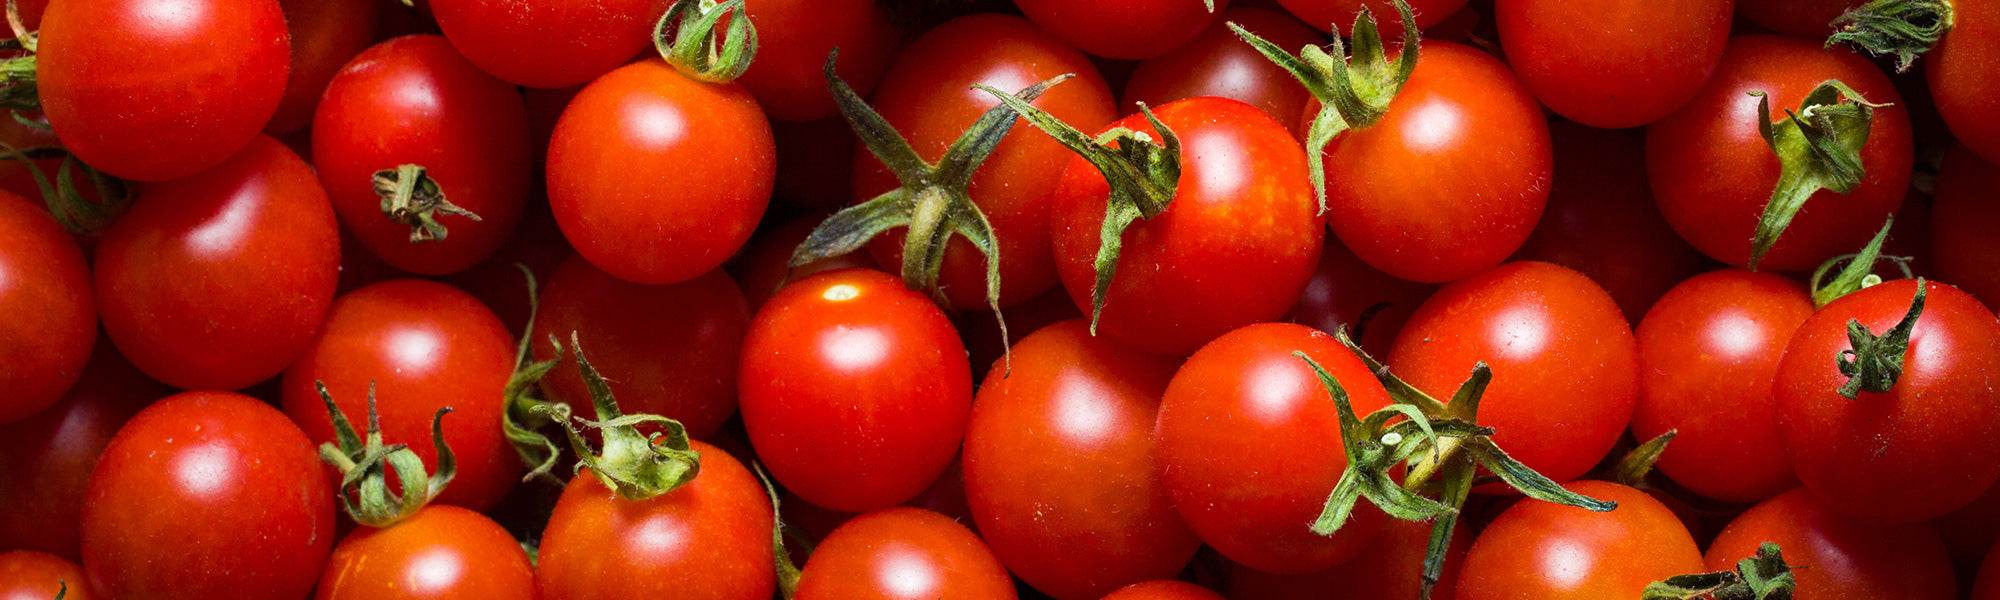 Tomate Cerise Sweet 100 origine France